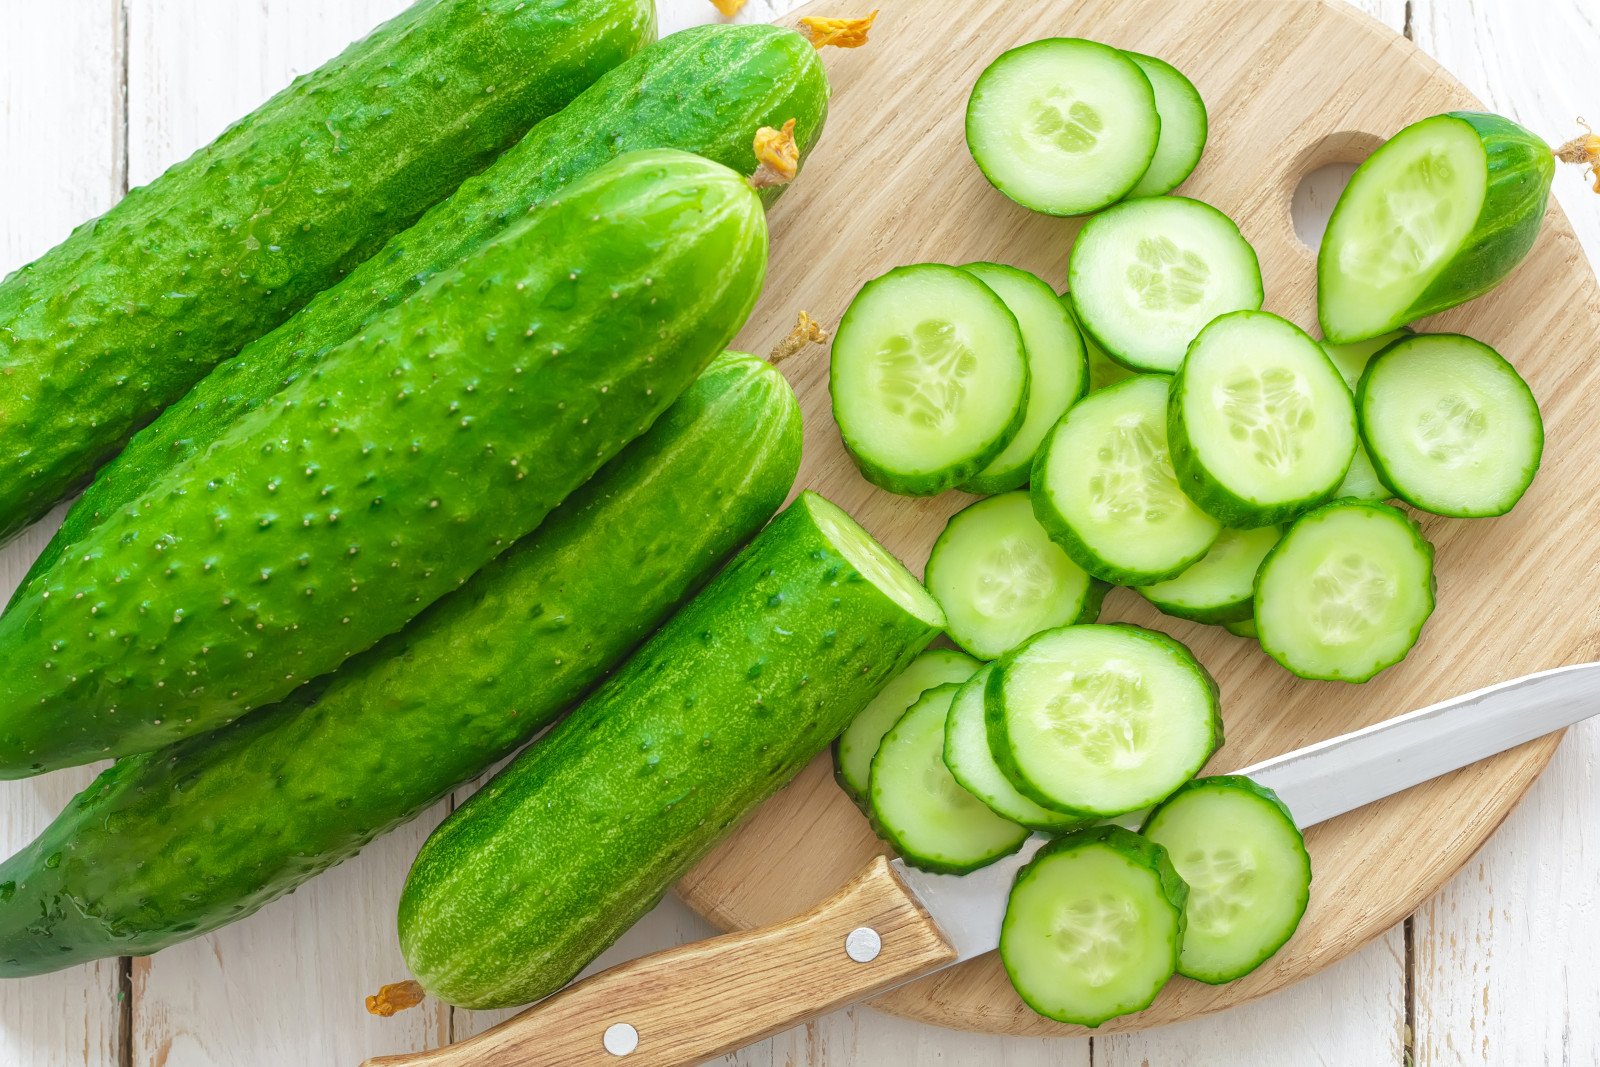 Is a cucumber pepper a fruit?